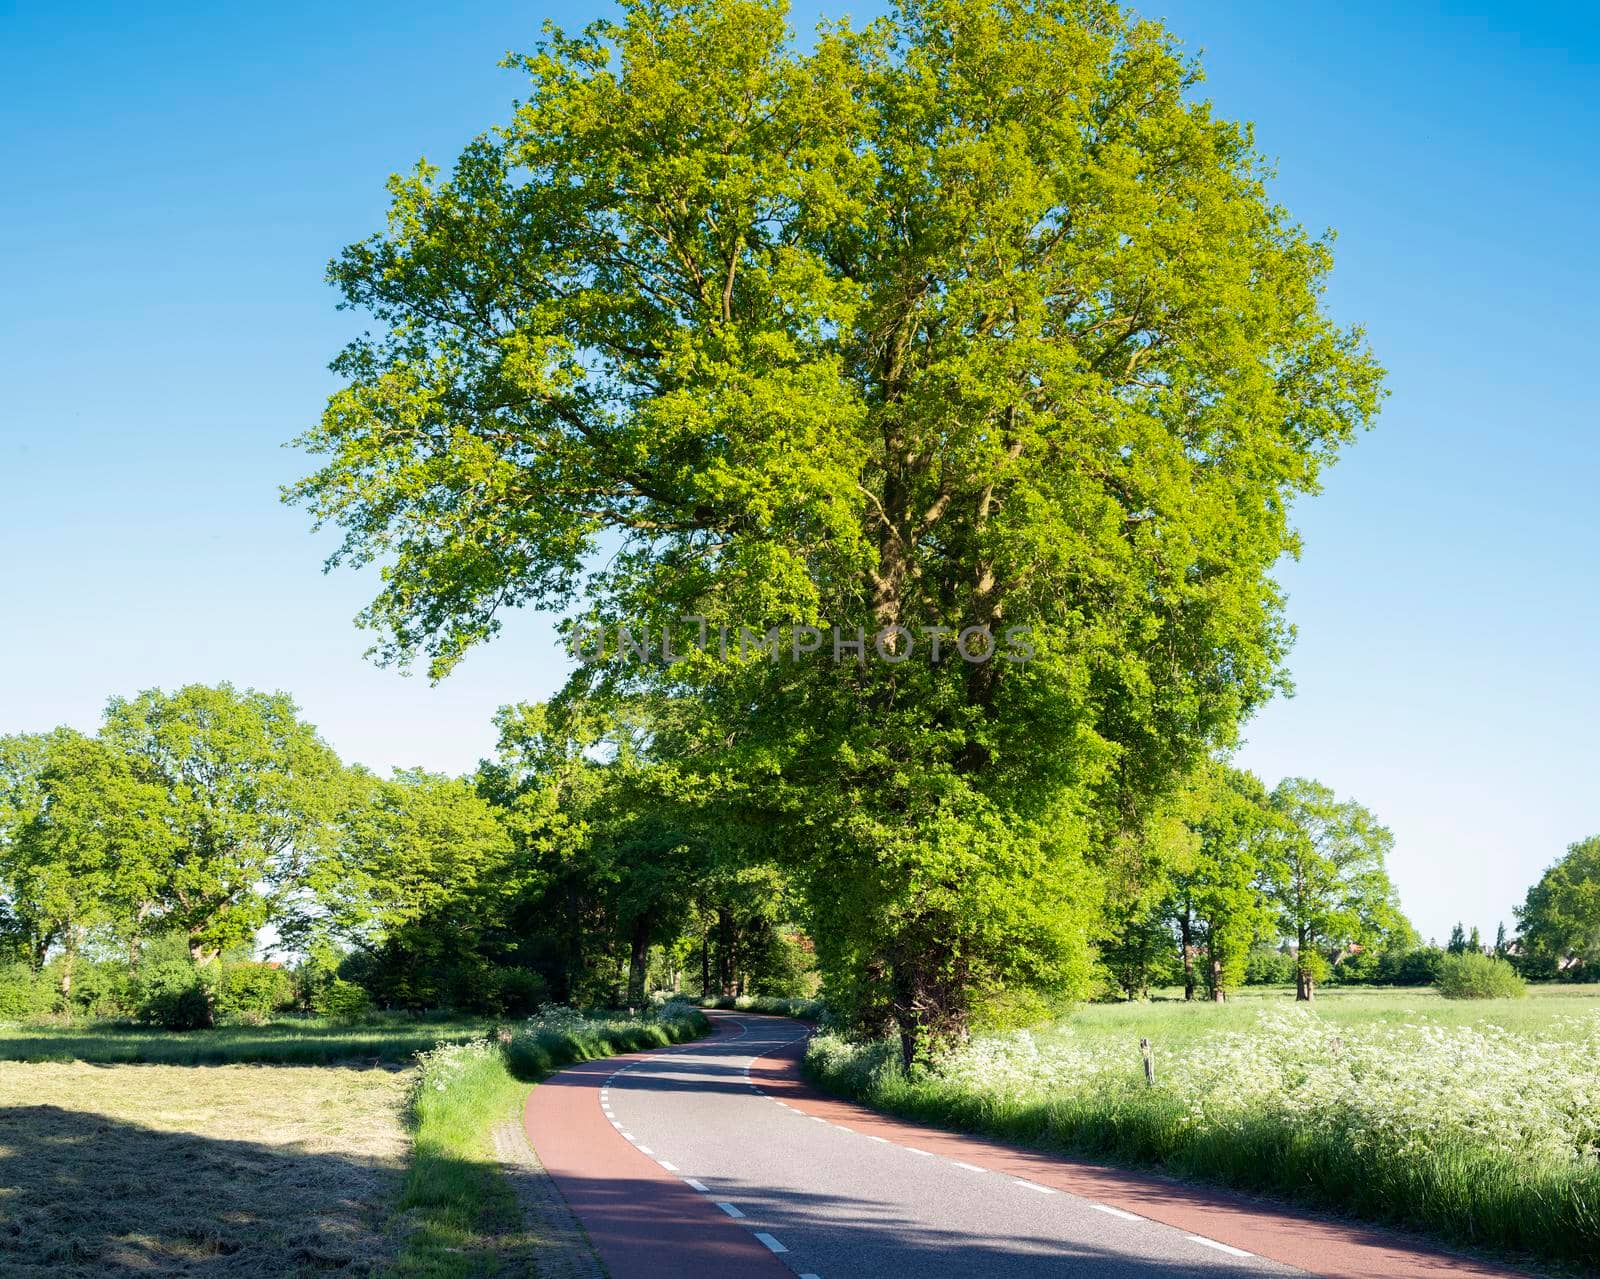 road with trees and summer flowers in area of twente in dutch province of overijssel between enschede and oldenzaal by ahavelaar